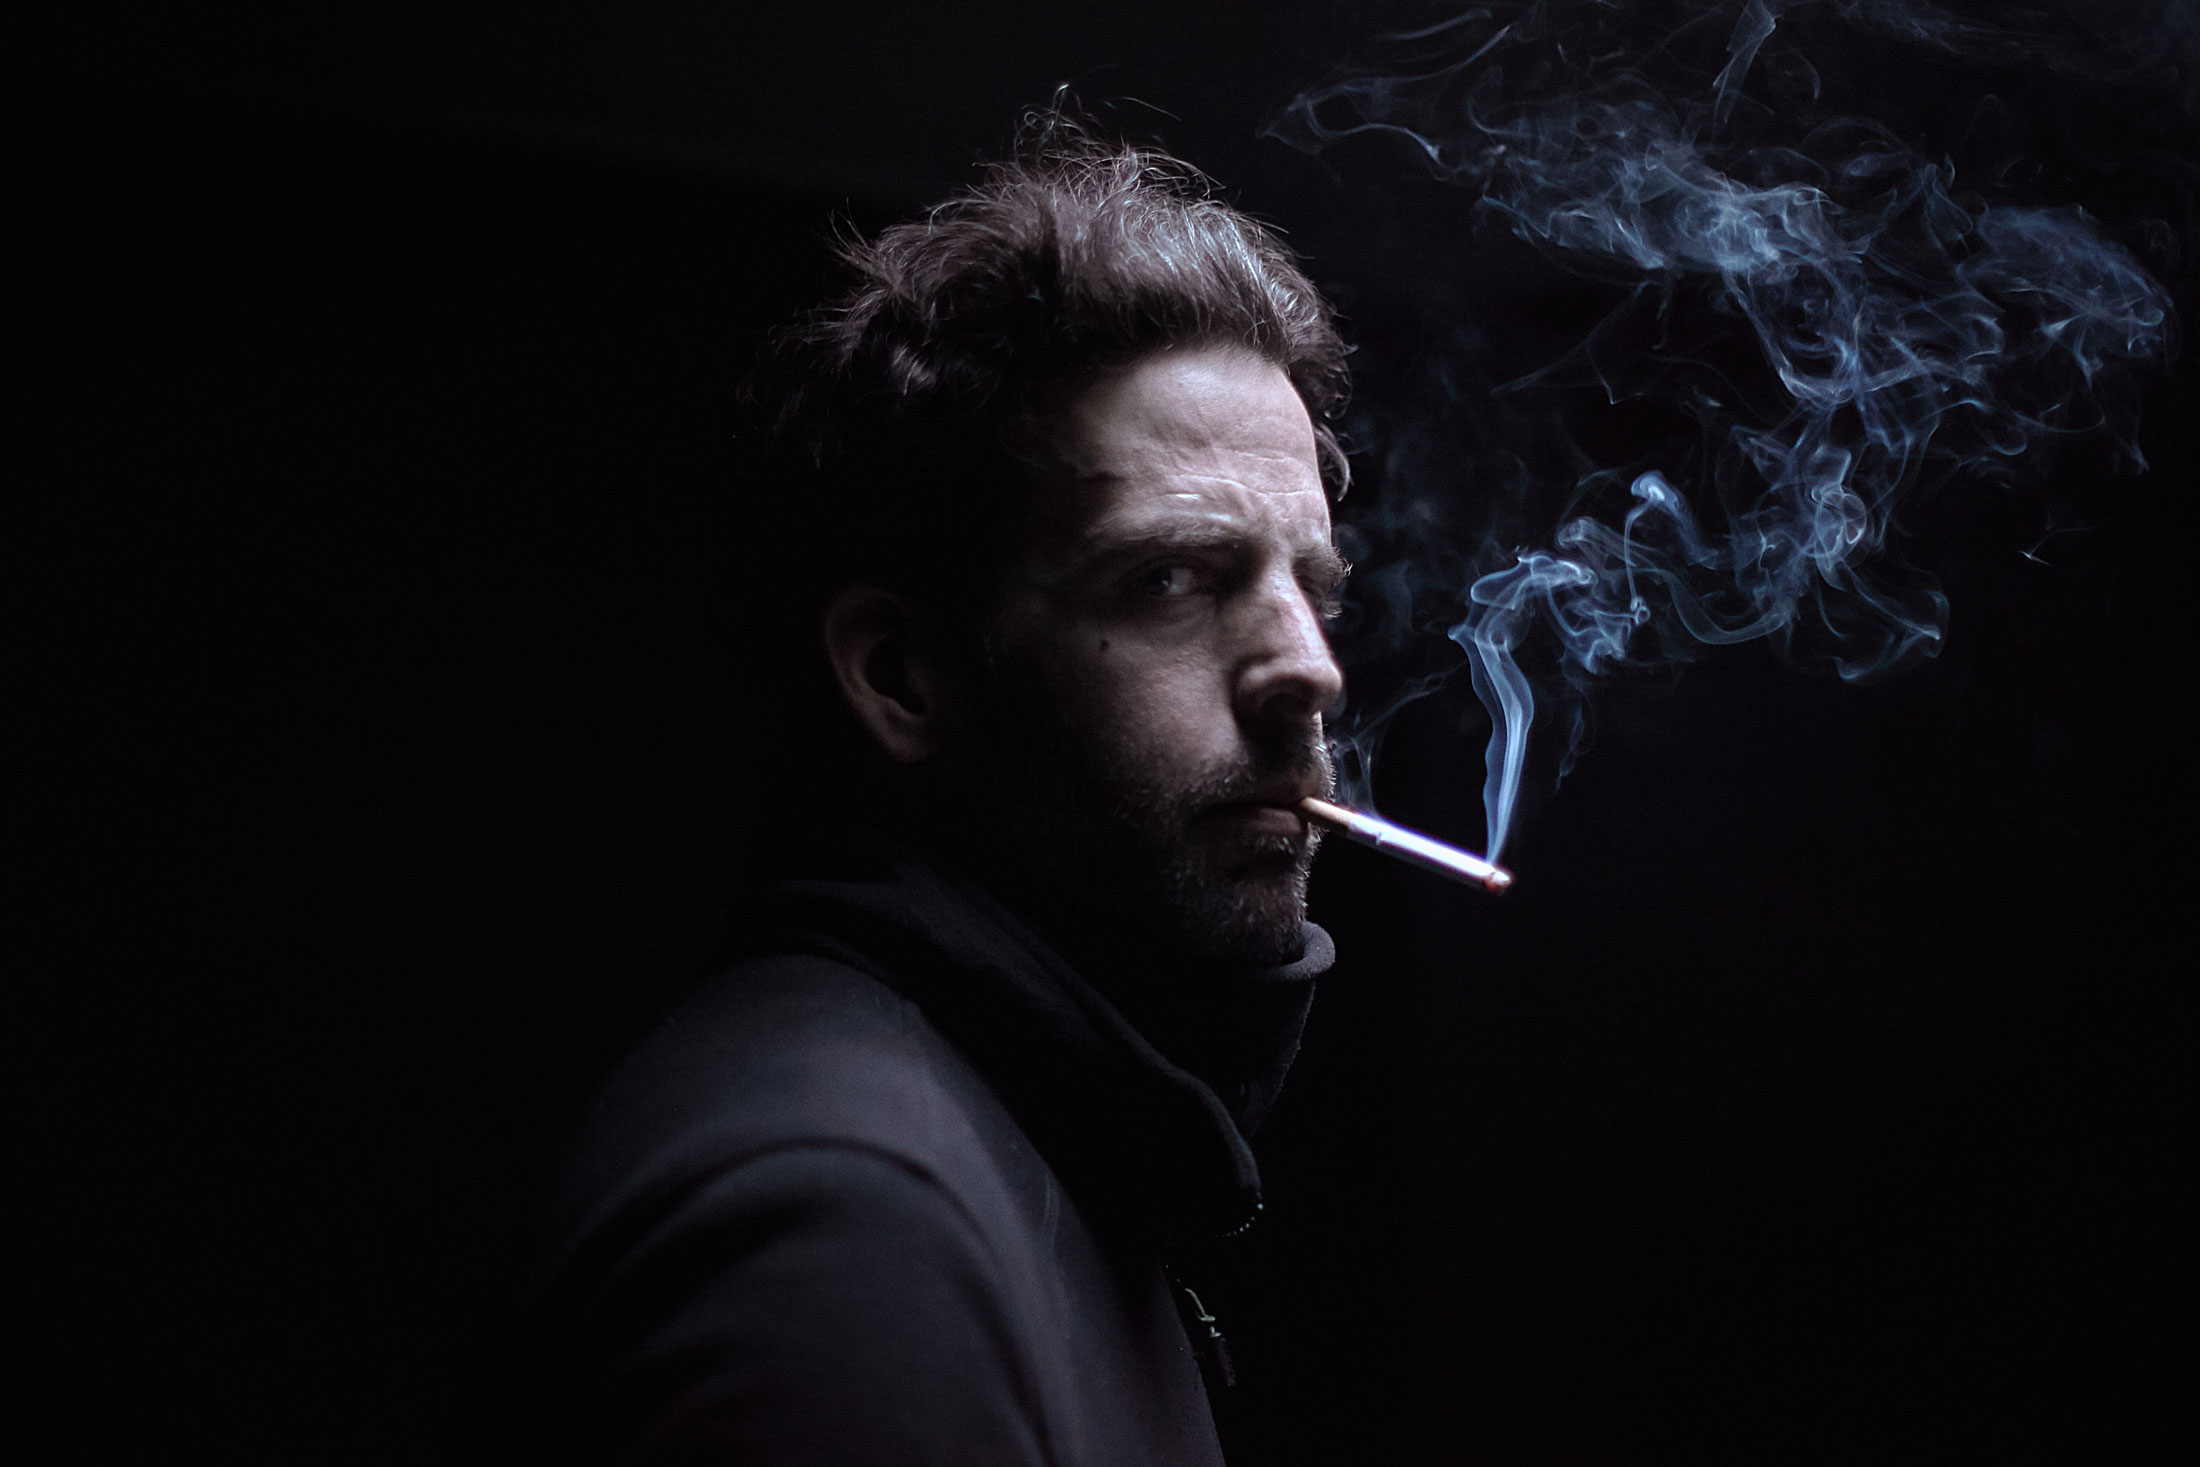 Denis Meyers smoking cigarette smoke painter black background portrait photographer Brussels Belgium